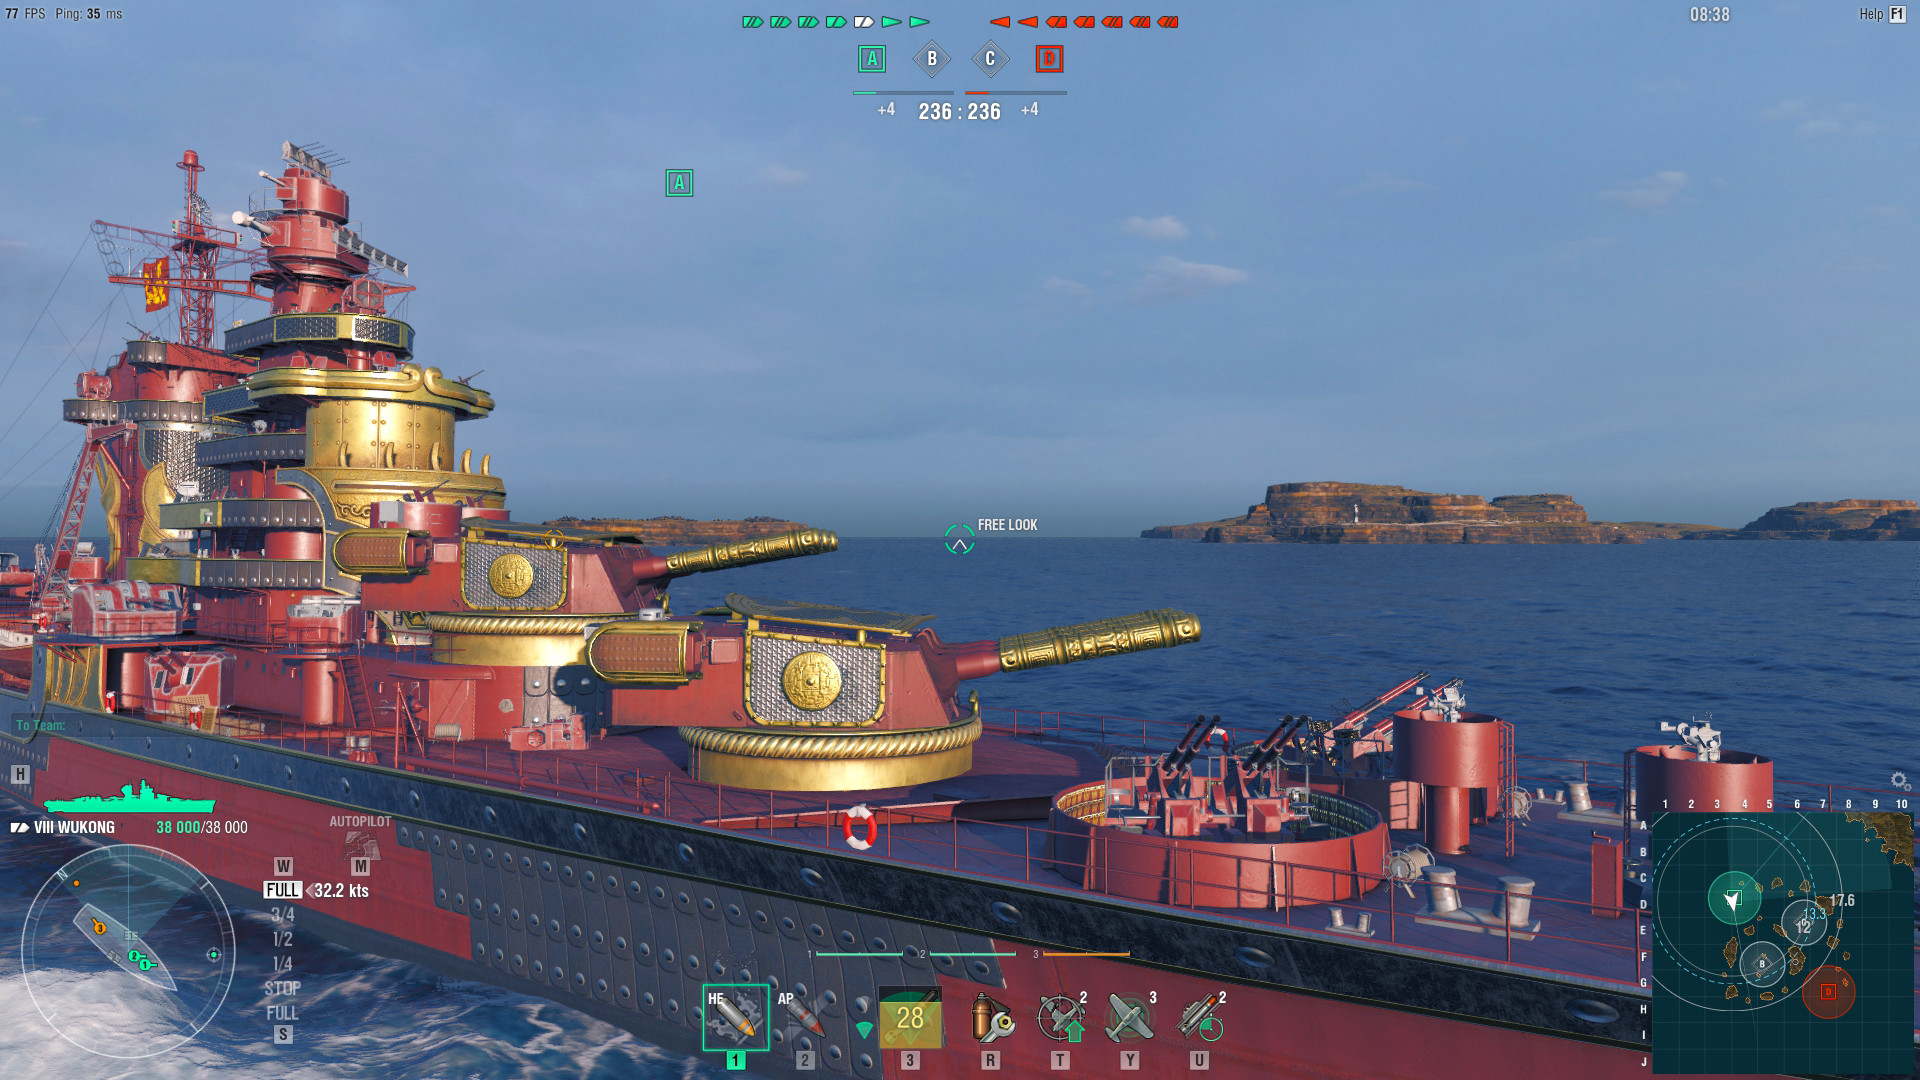 World of Warships — Wukong screenshot